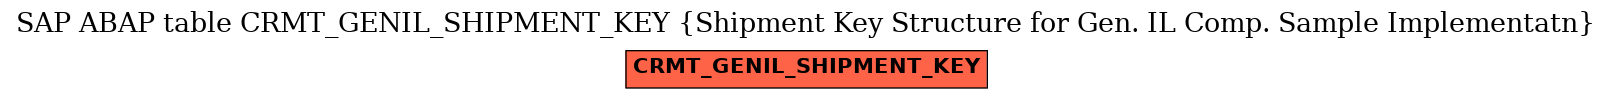 E-R Diagram for table CRMT_GENIL_SHIPMENT_KEY (Shipment Key Structure for Gen. IL Comp. Sample Implementatn)